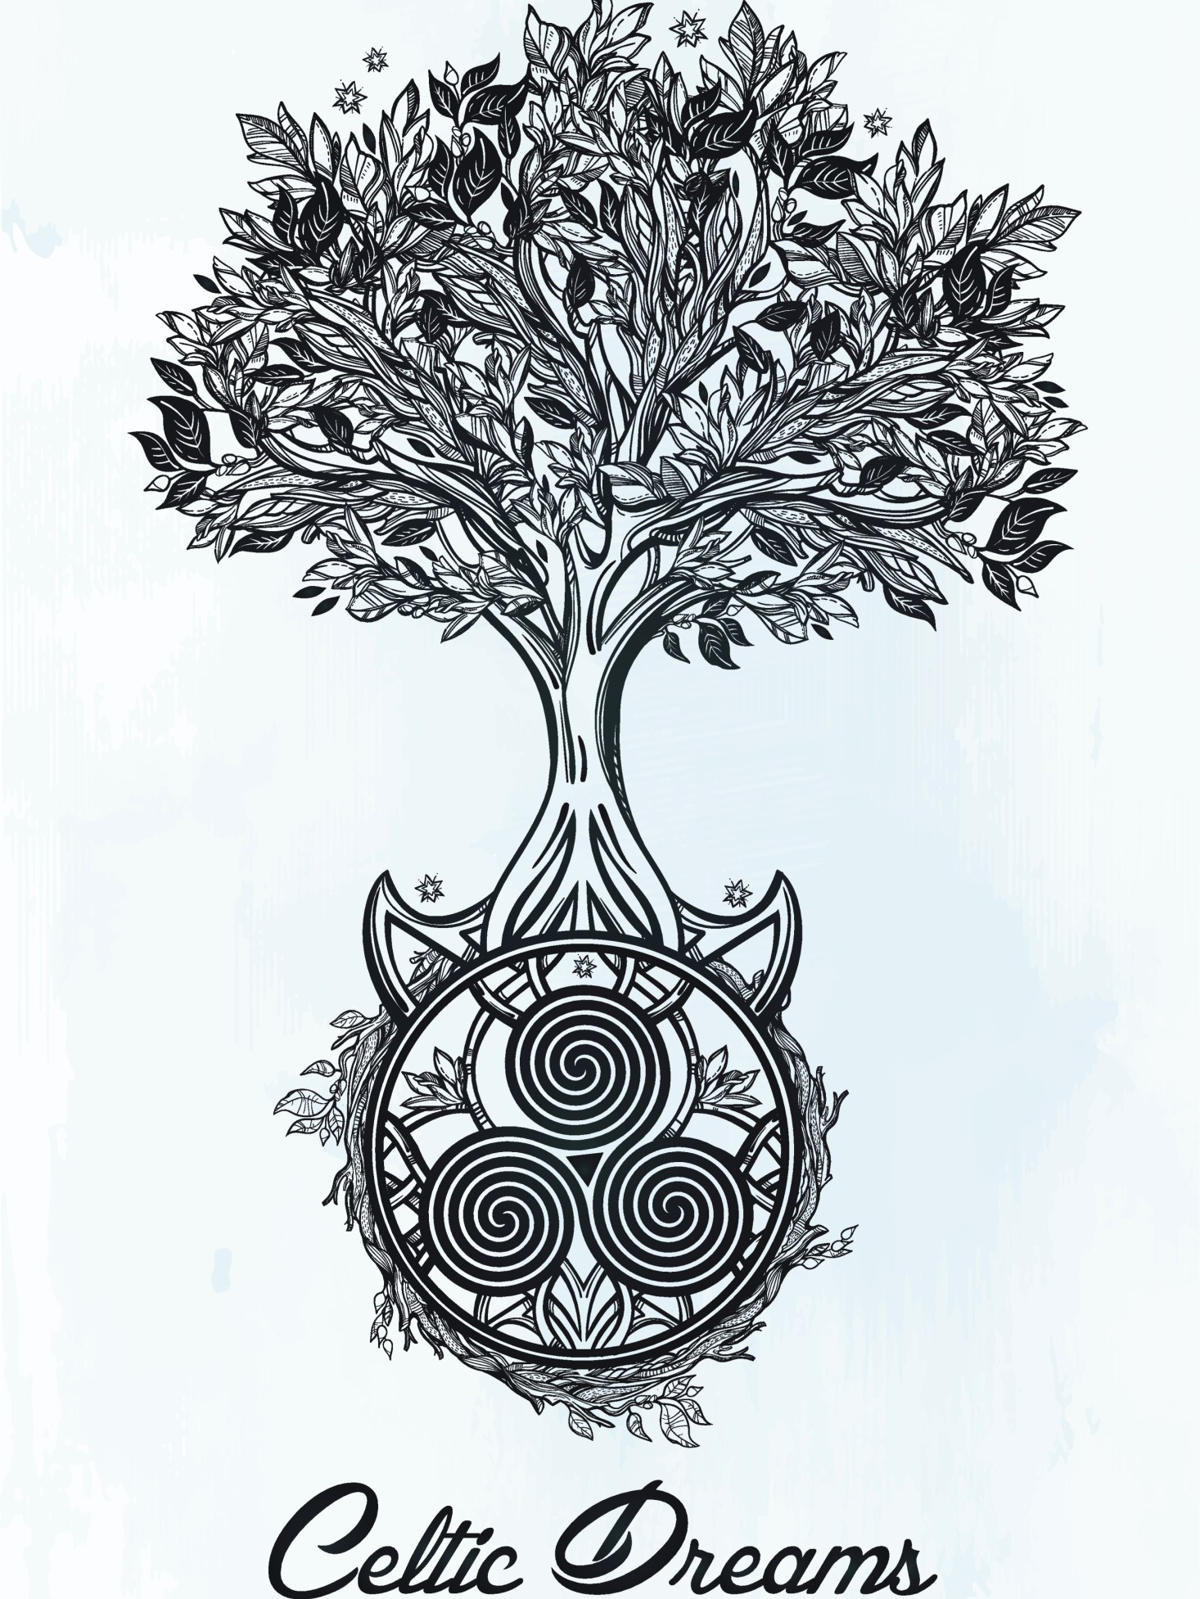 oak tree meaning symbolism